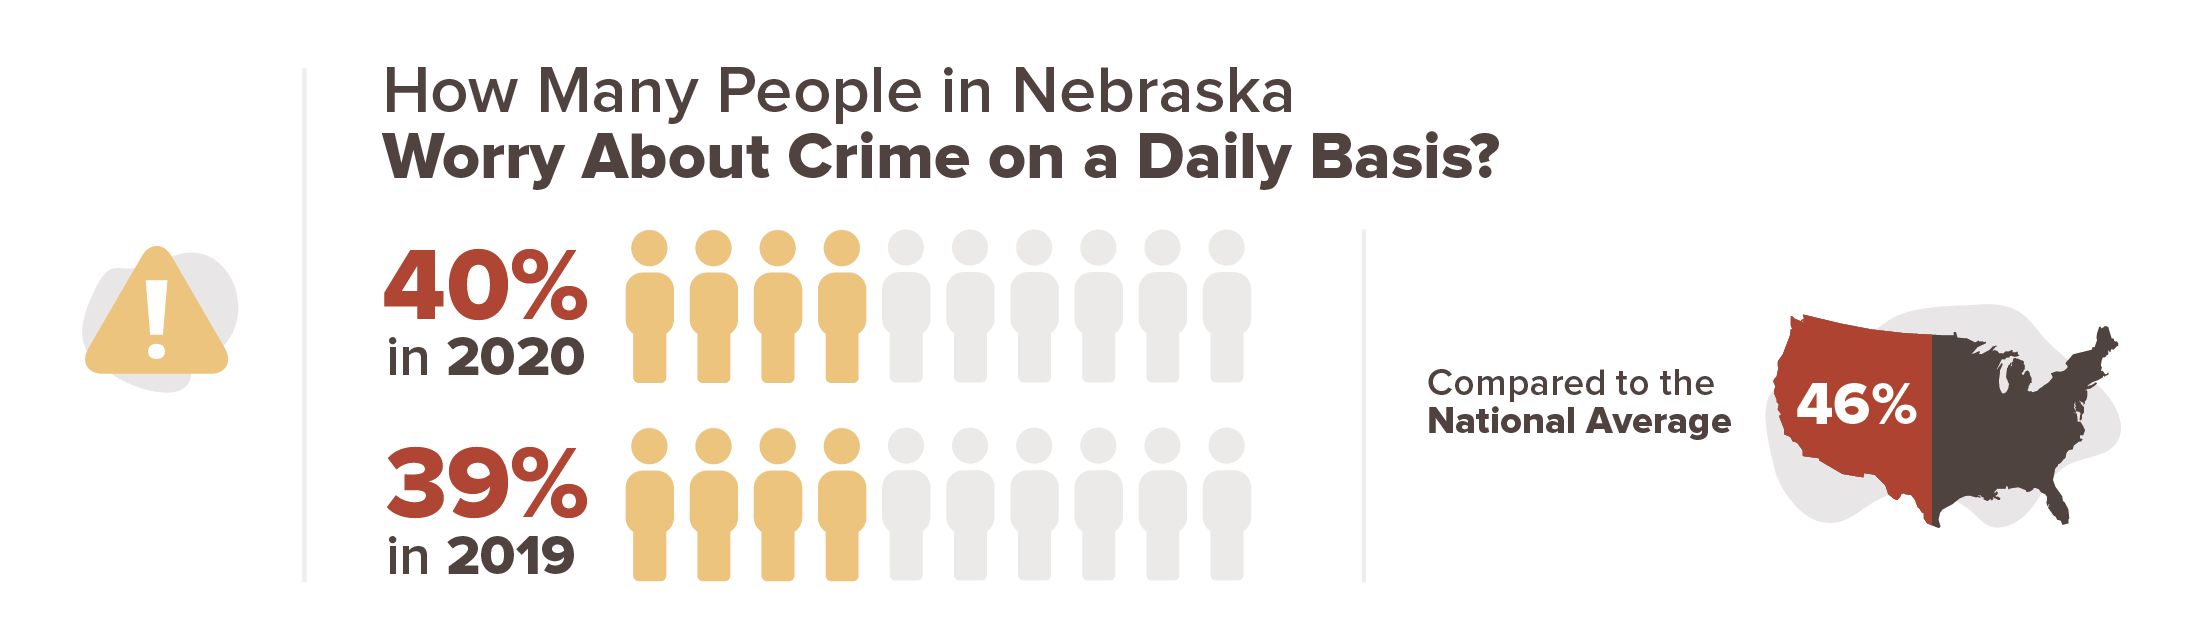 Nebraska crime stats infographic